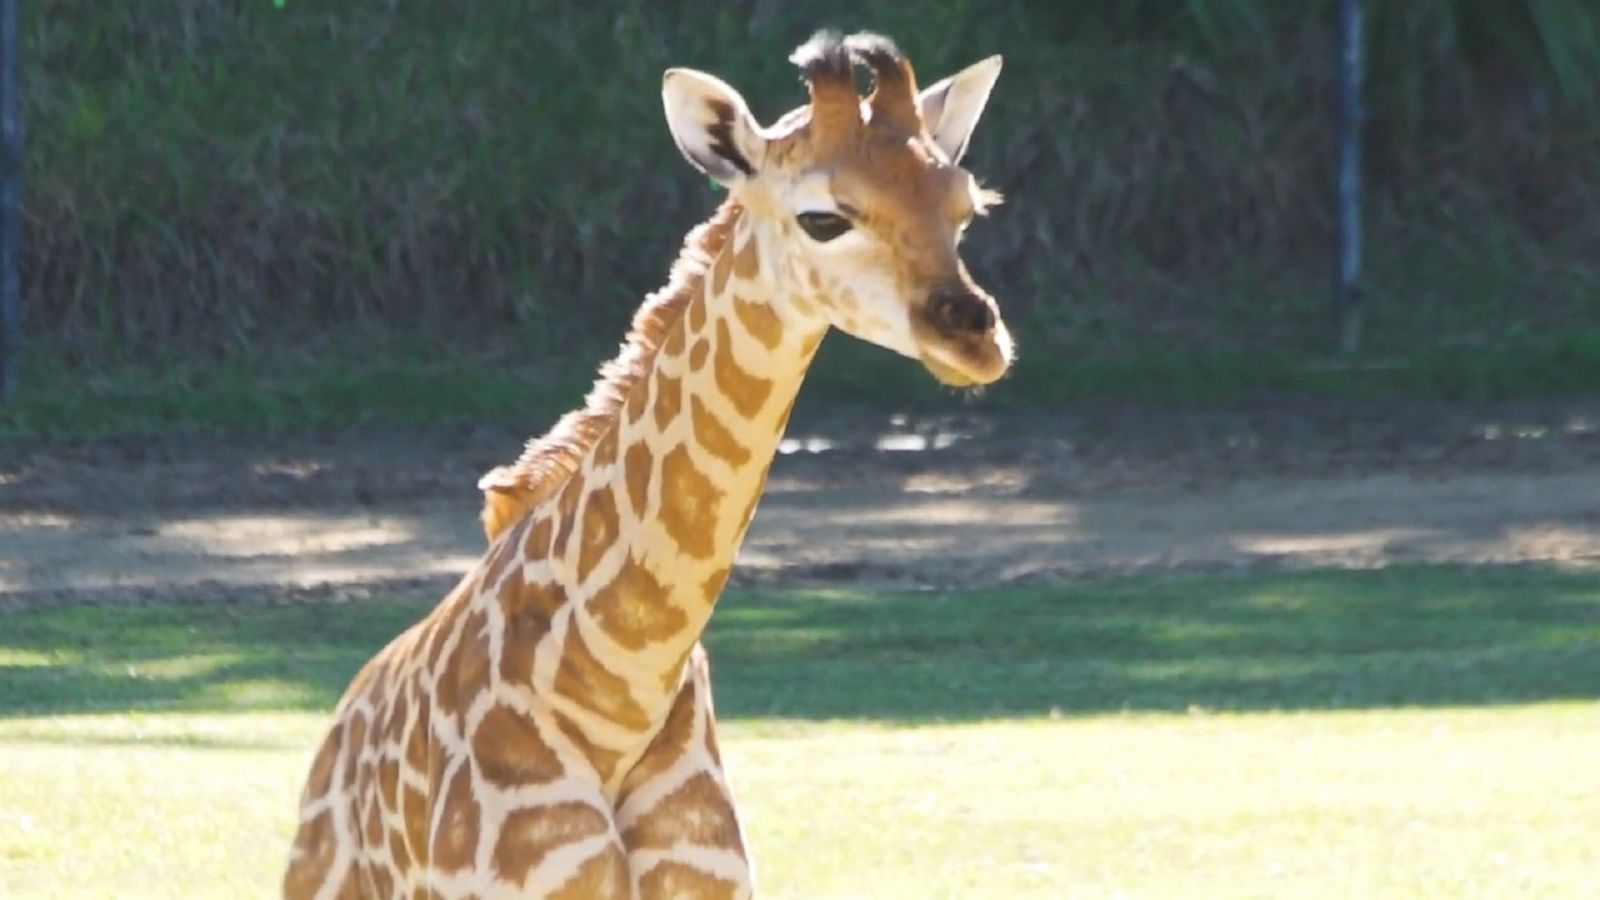 Letter M Monogram Child Safari Animals Giraffe T-Shirt